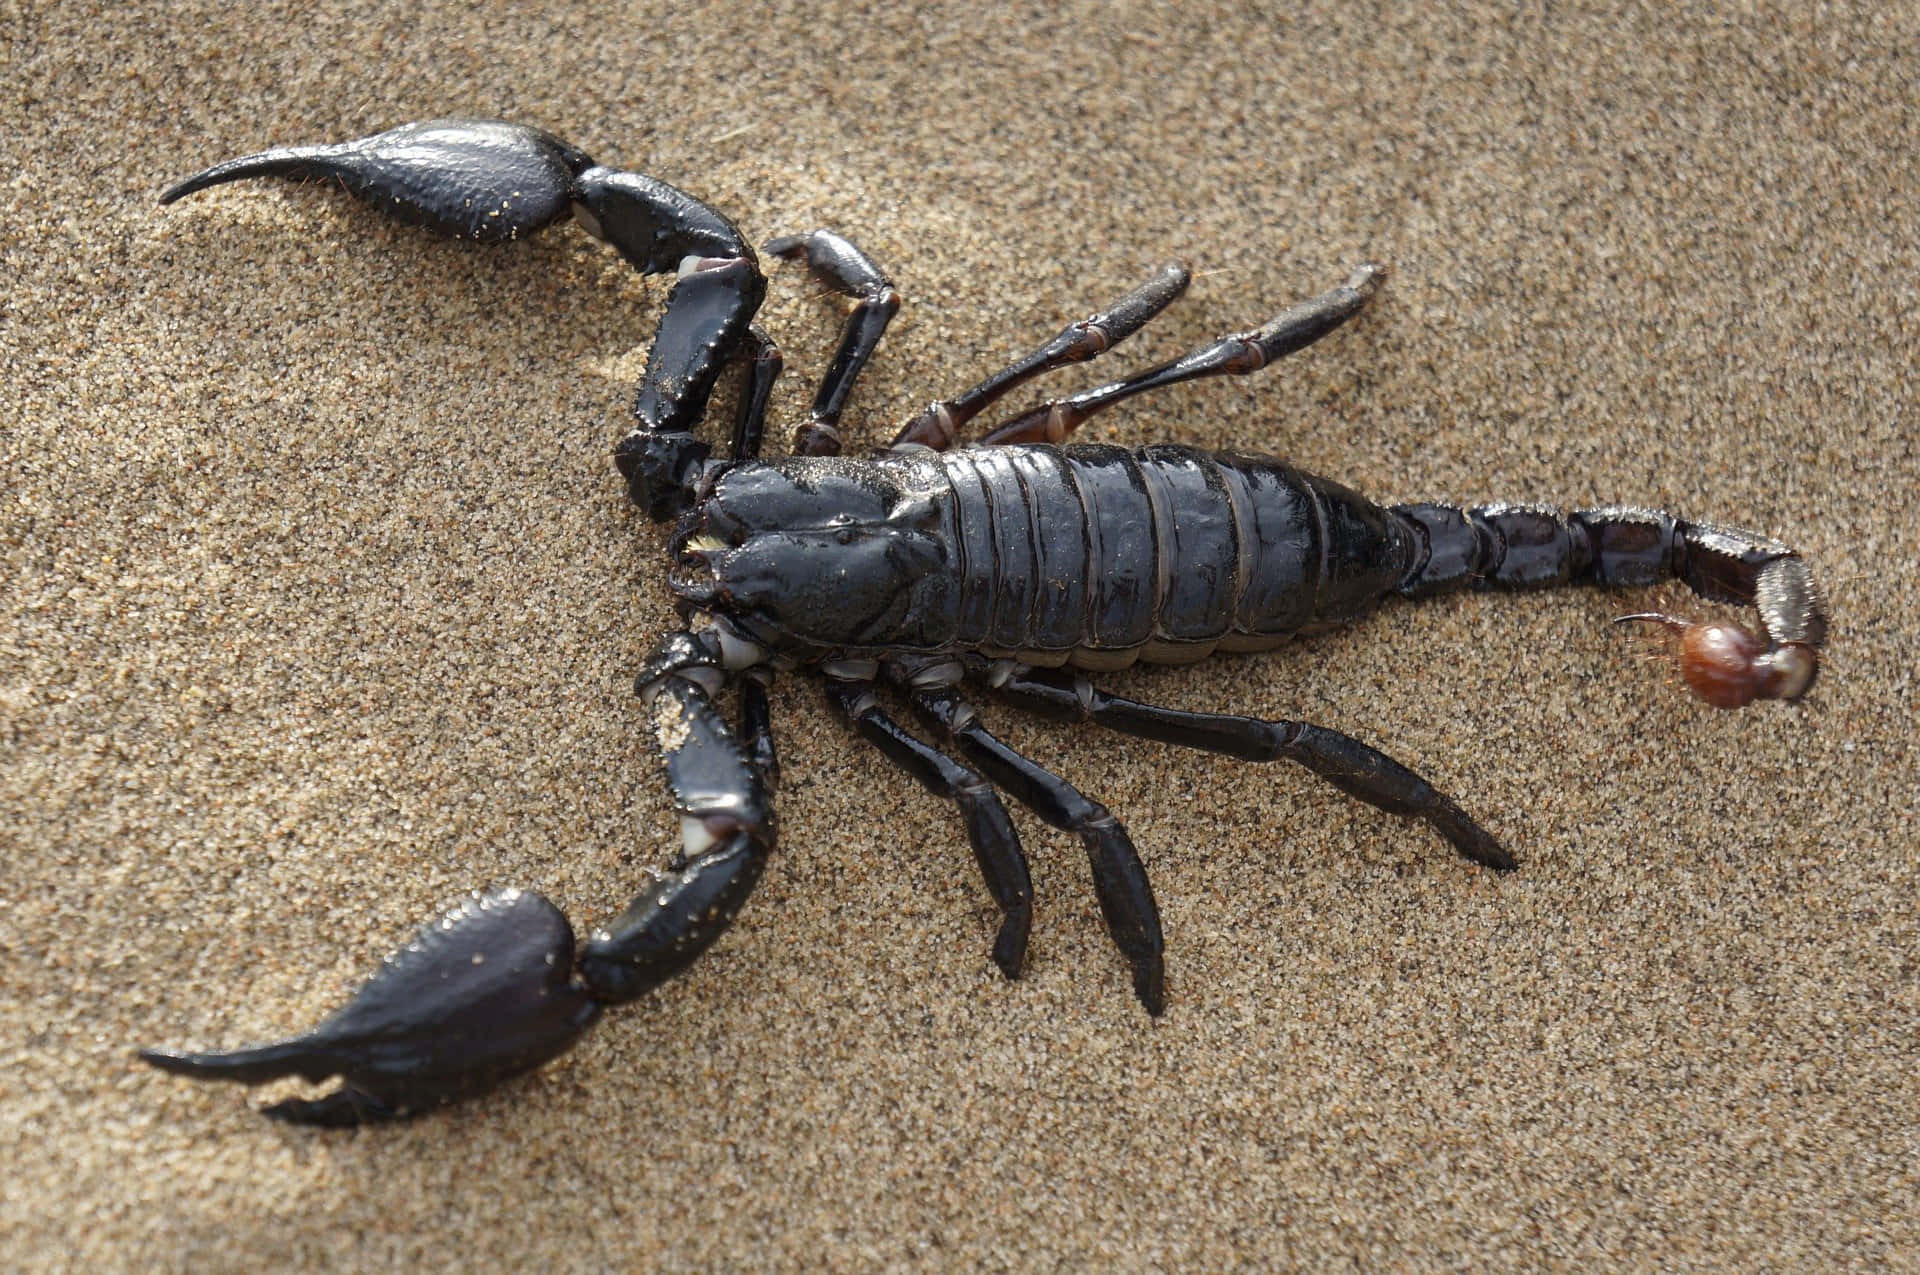 A closeup of a dangerous scorpion.